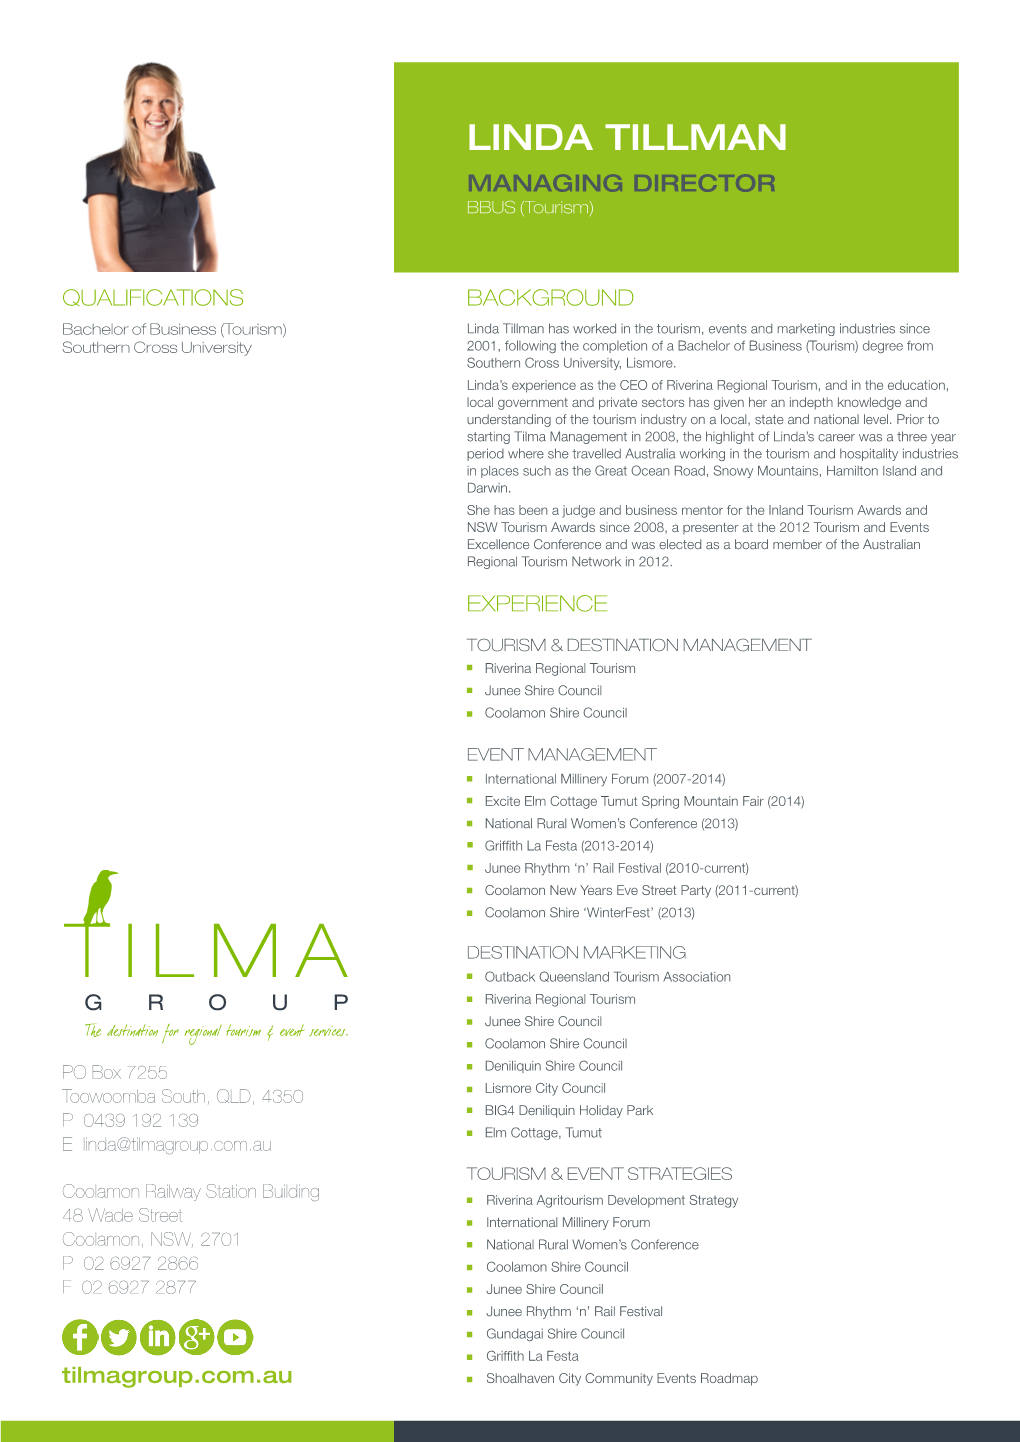 LINDA TILLMAN MANAGING DIRECTOR BBUS (Tourism)